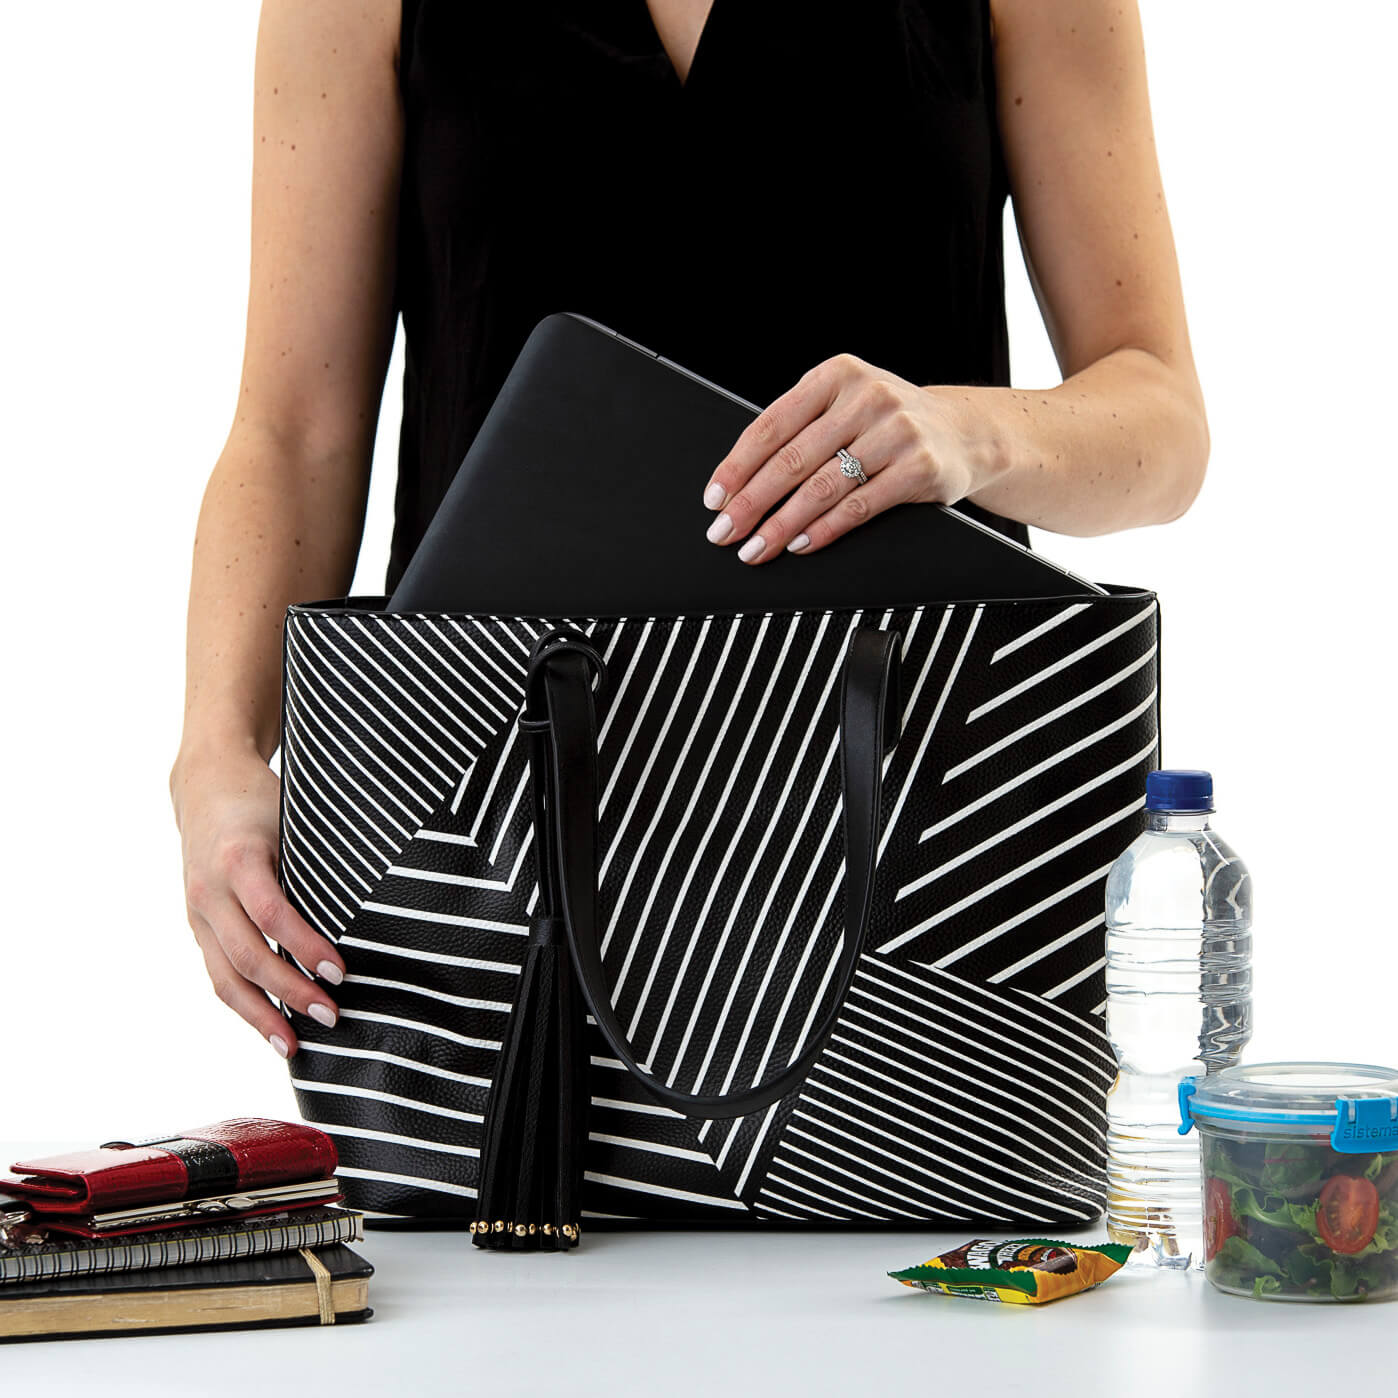 Michelle Cool Clutch (Black & White Stripe) Cool Shoulder Handbag - Cool Clutch cooler bag handbag insulated wine lunch handbags